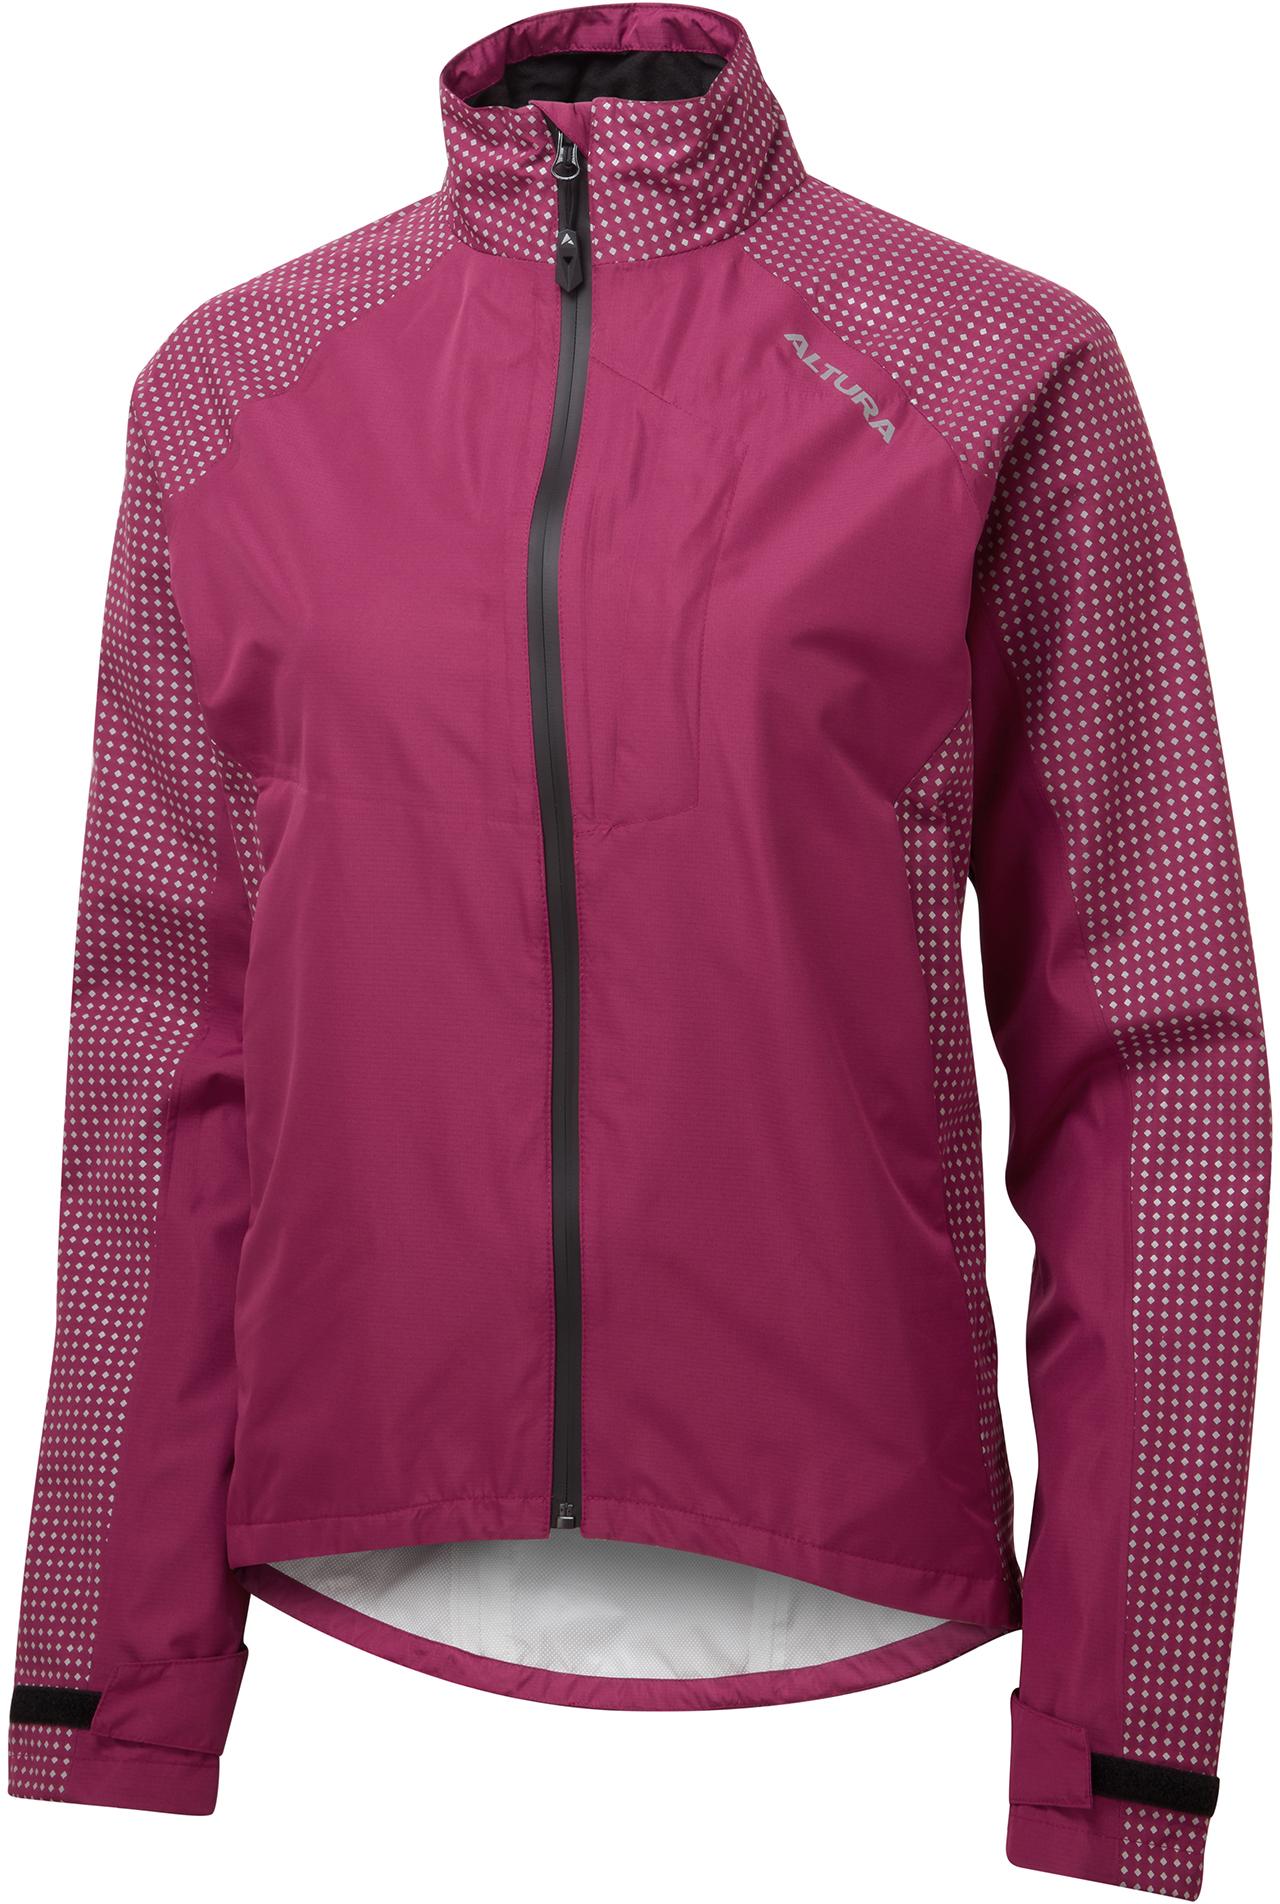 Altura Nightvision Storm Women's Waterproof Jacket Pink 8